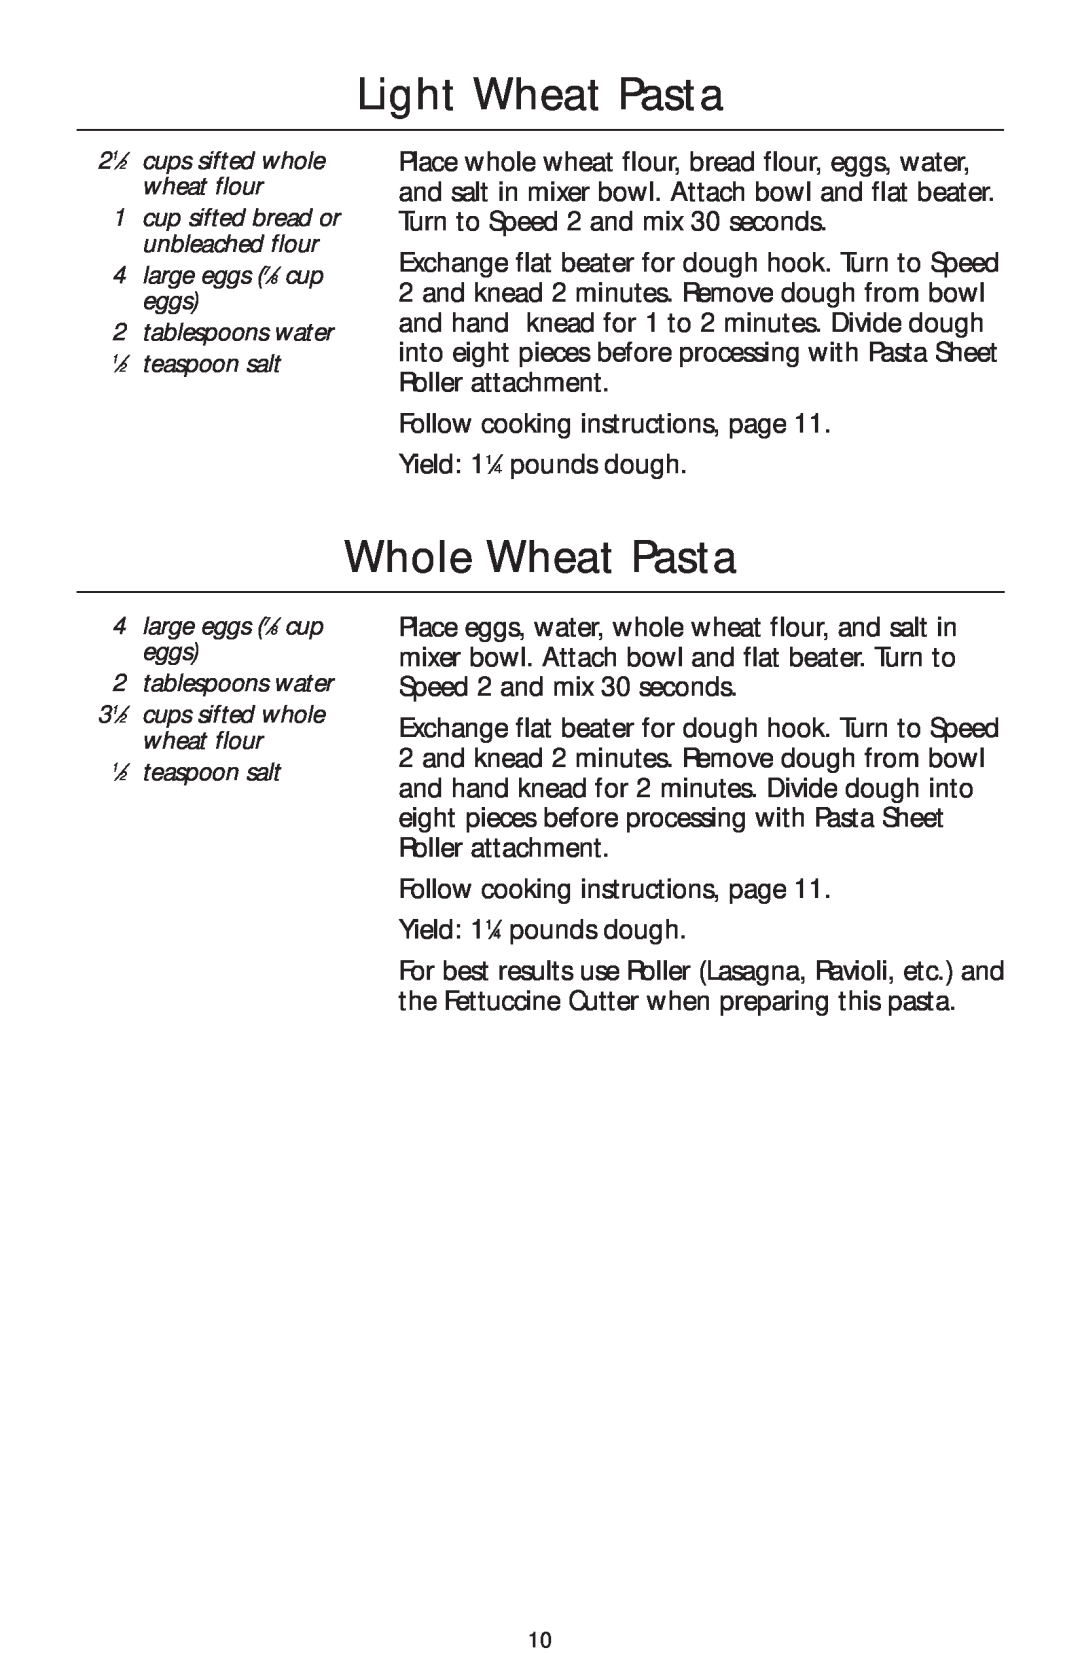 KitchenAid KPRA manual Light Wheat Pasta, Whole Wheat Pasta, 21⁄2 cups sifted whole wheat flour, large eggs 7⁄8 cup eggs 